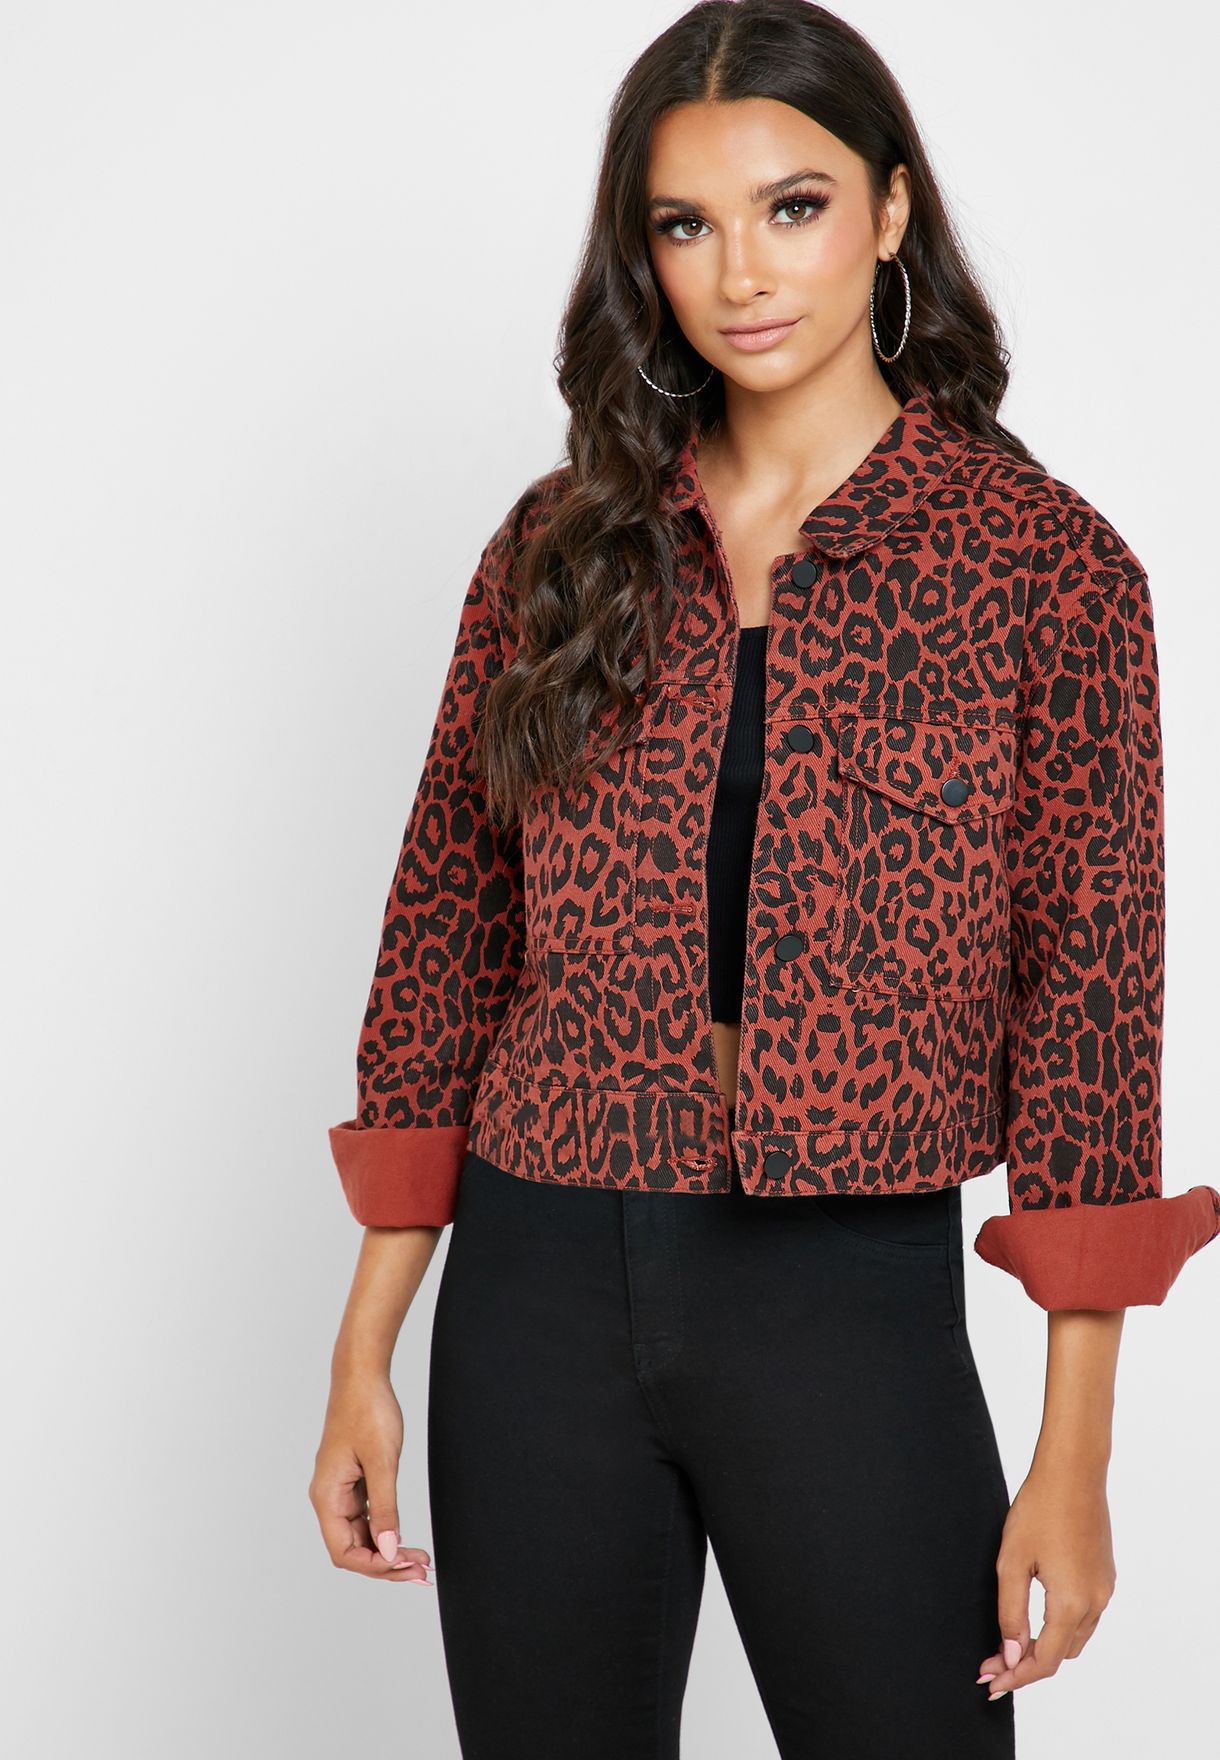 Buy Ginger prints Leopard Print Denim Jacket for Women in Riyadh, Jeddah